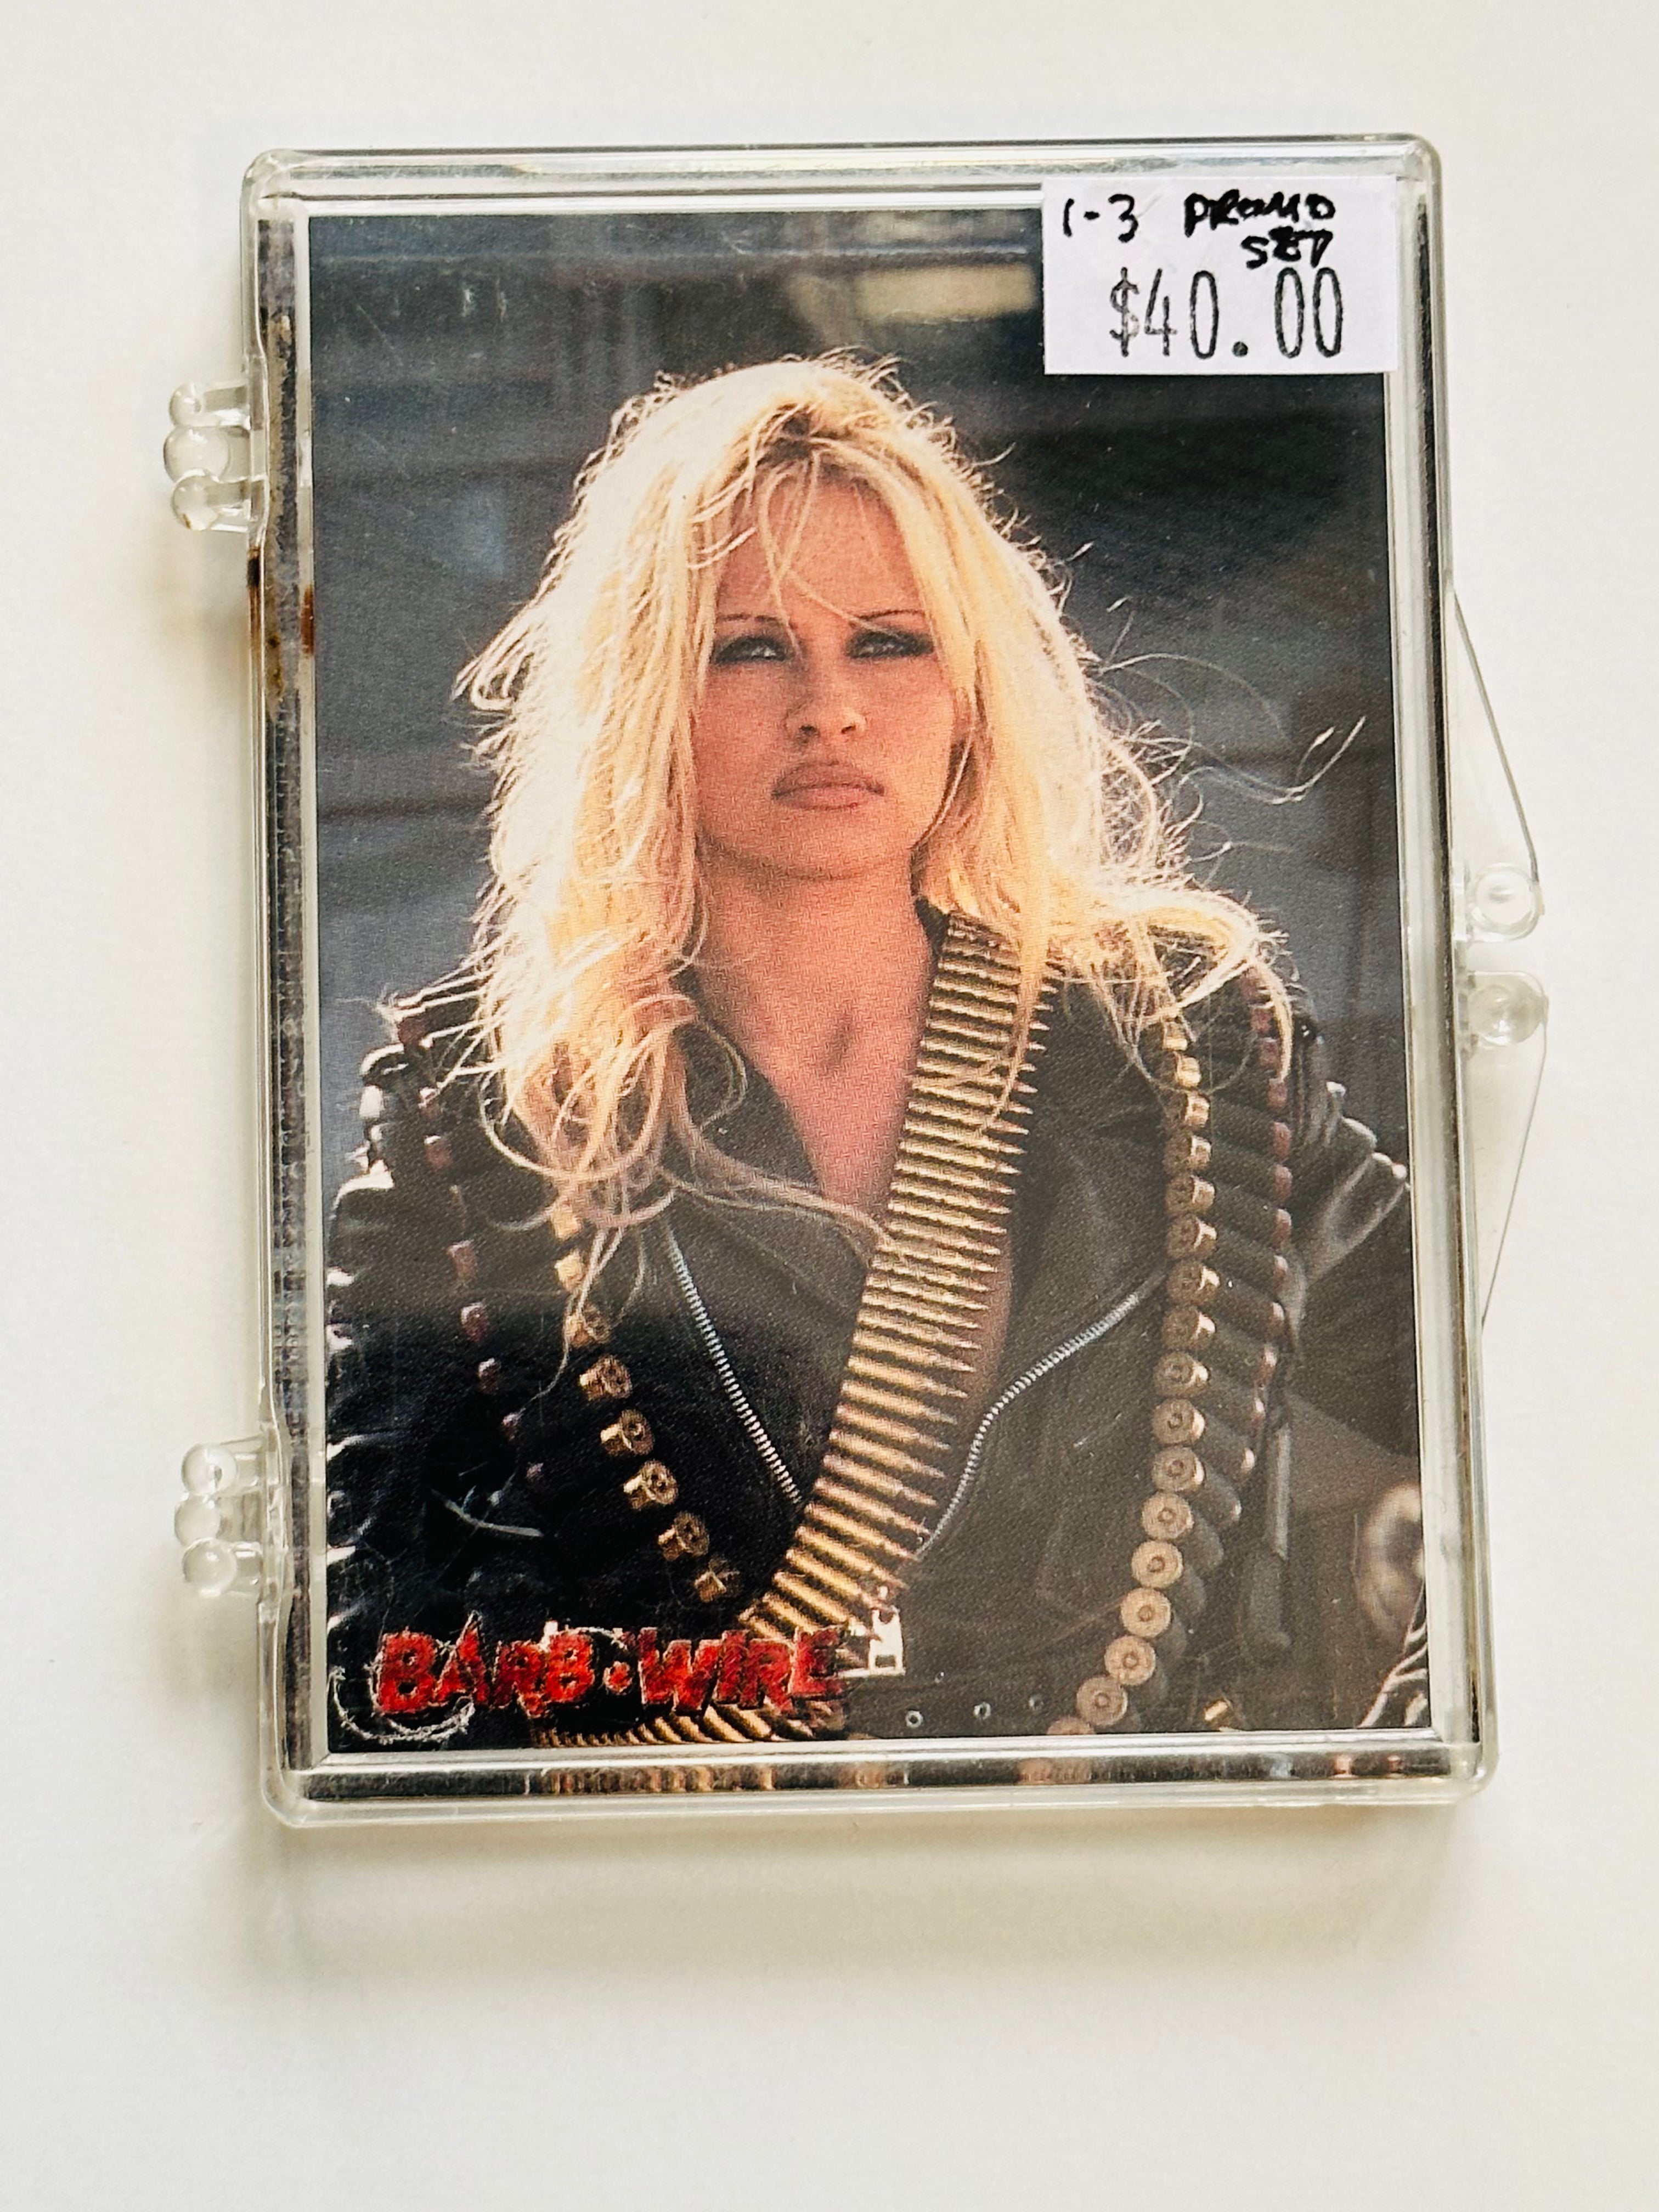 Pamela Anderson Barb-wire rare 3 promo cards set 1996